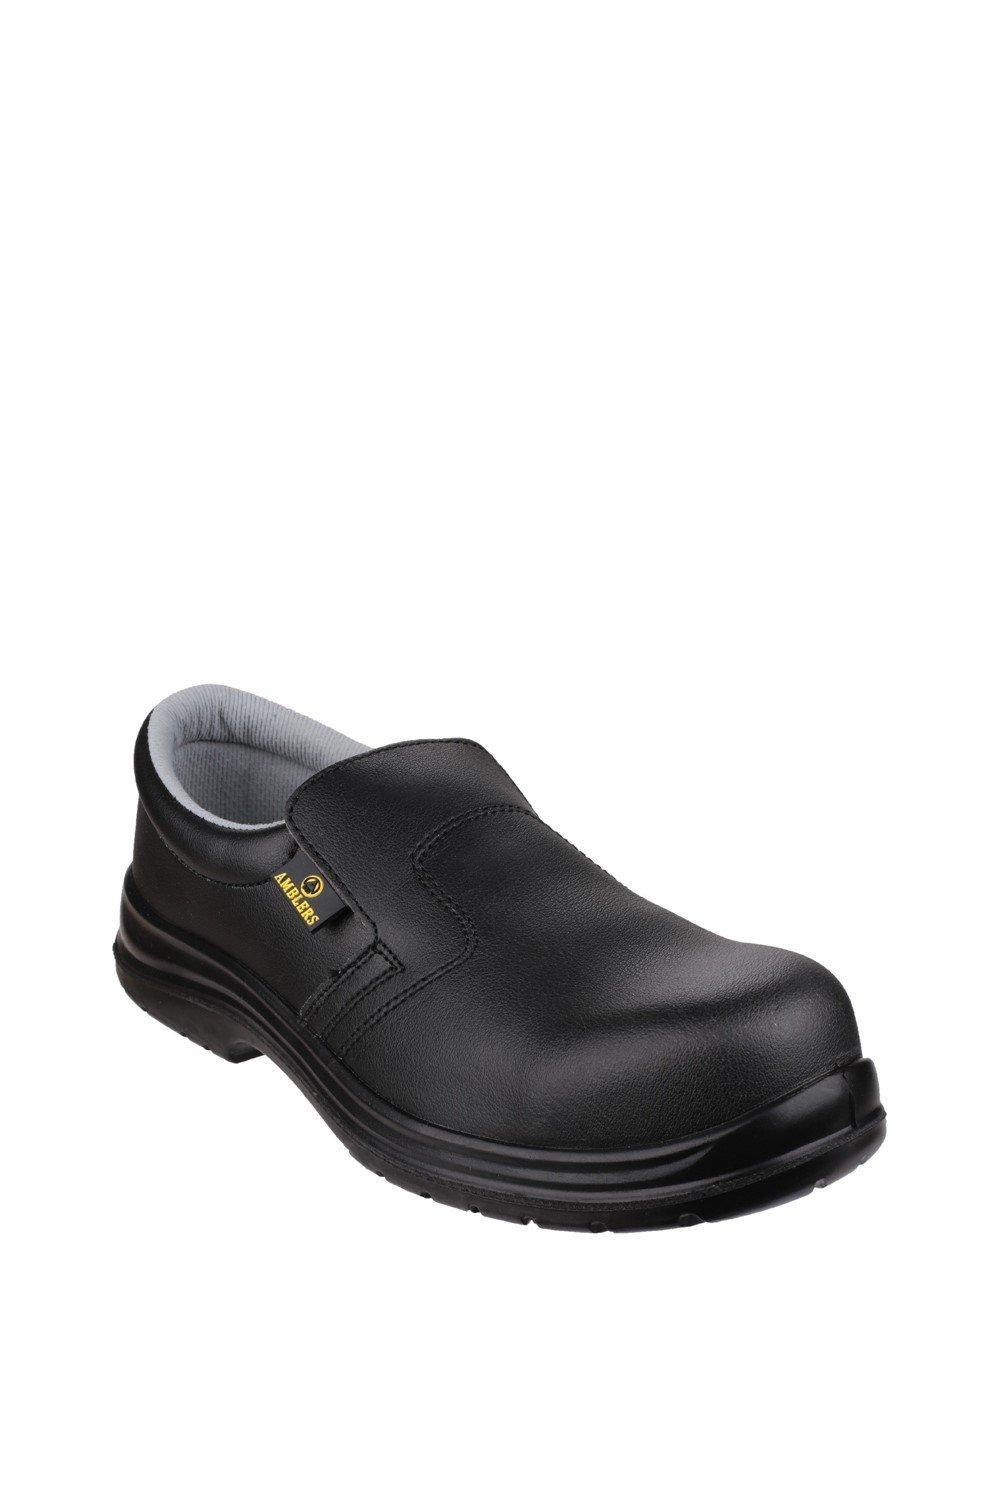 Защитная обувь 'FS661' Amblers Safety, черный 4pcs lot src 05vdc sh src 12vdc sh src 24vdc sh songle power relay 8pin 5v 12v 24v 1a pcb type